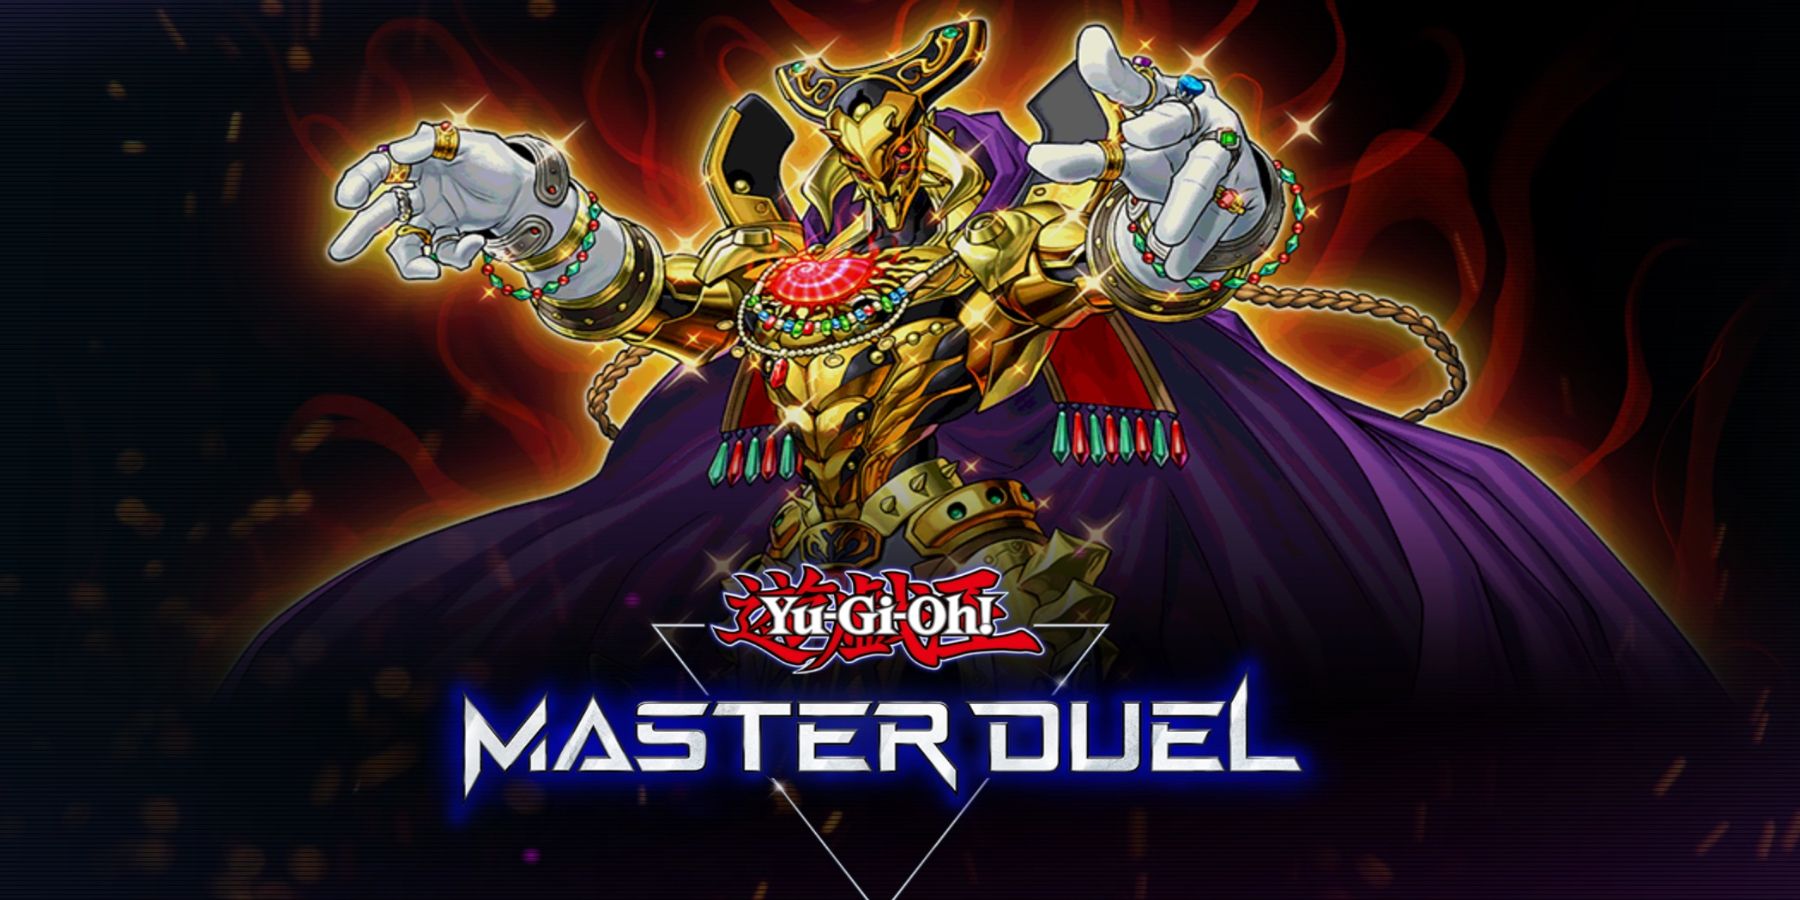 Duel master Yu